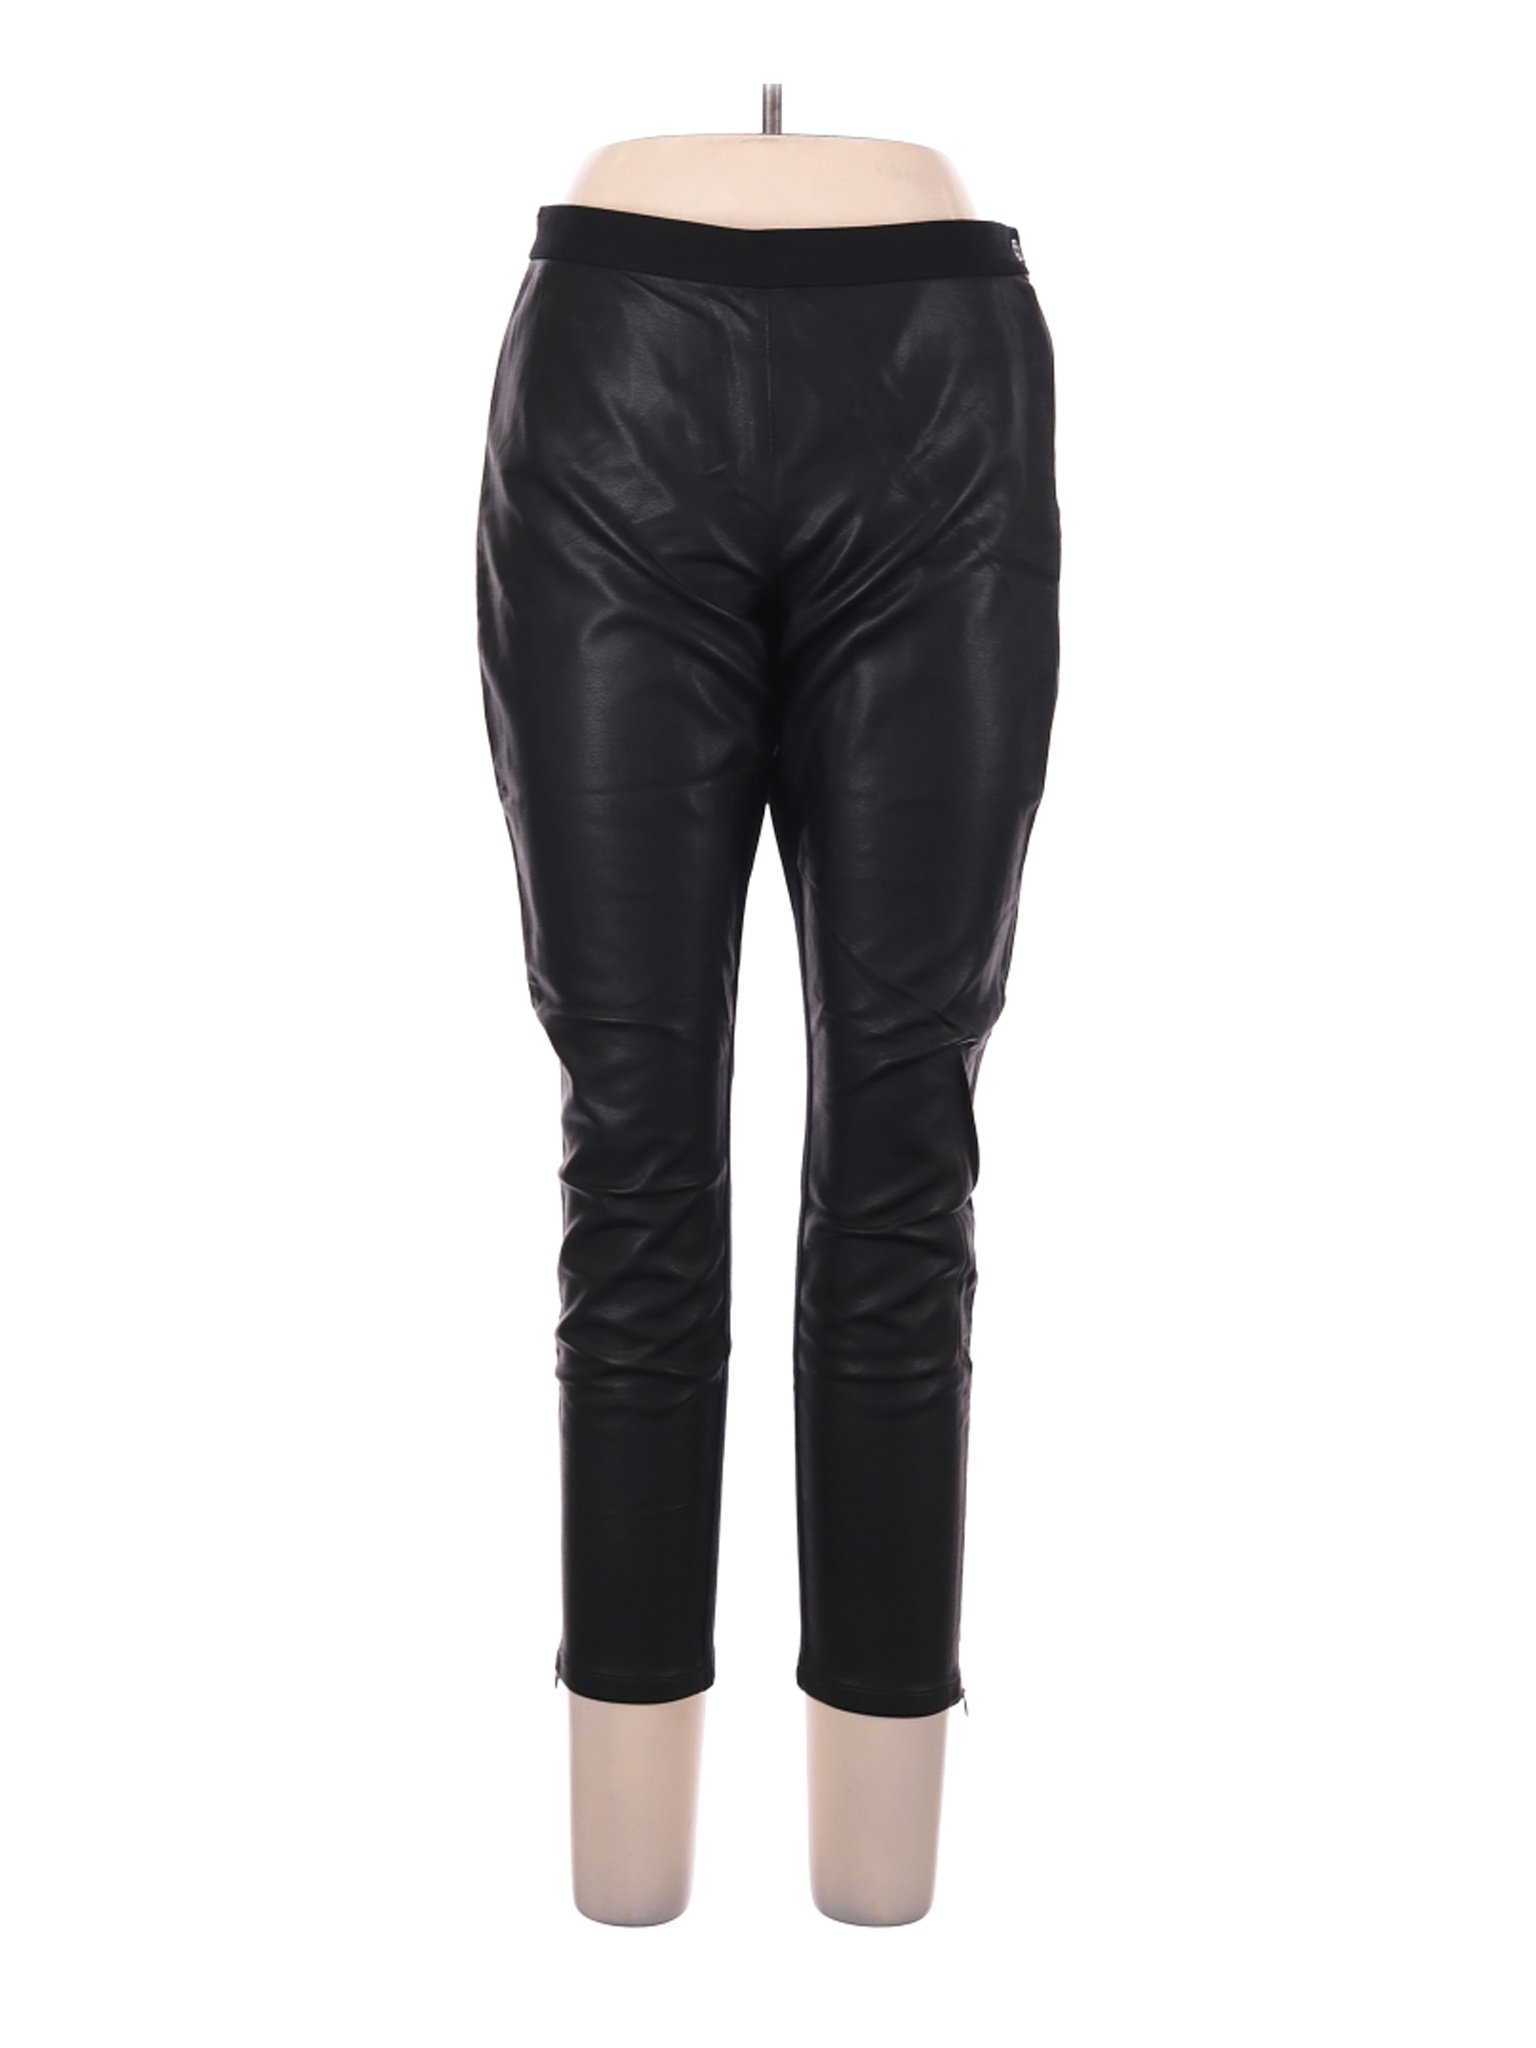 Banana Republic Women Black Faux Leather Pants 10 Petites | eBay